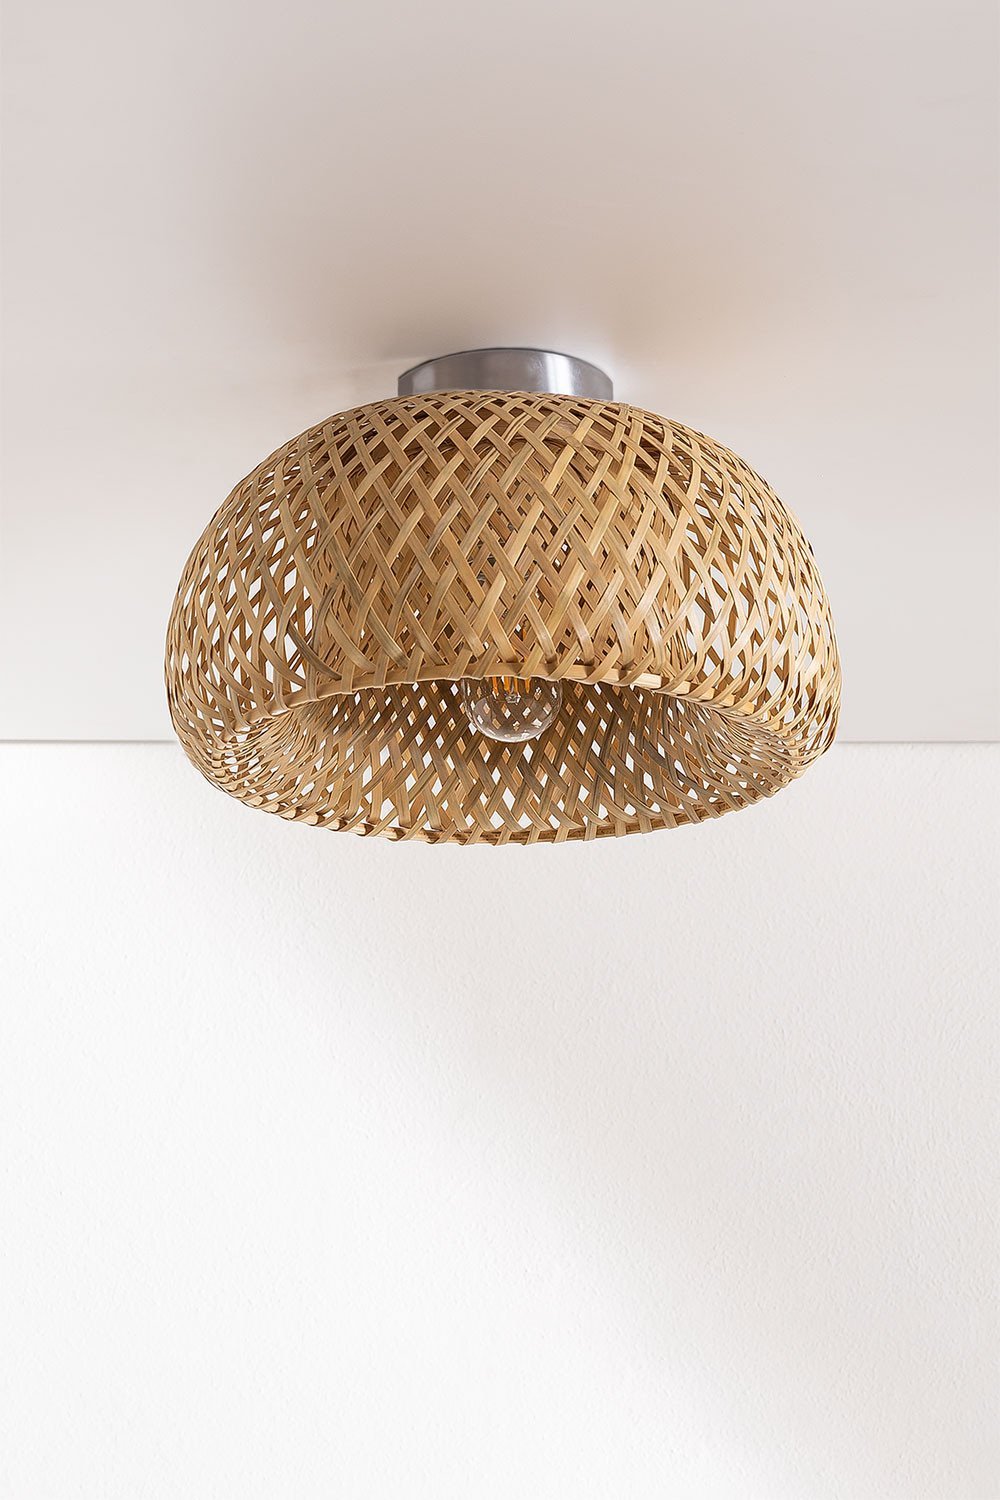 Bambusowa Lampa Sufitowa Taamper Style, obrazek w galerii 1